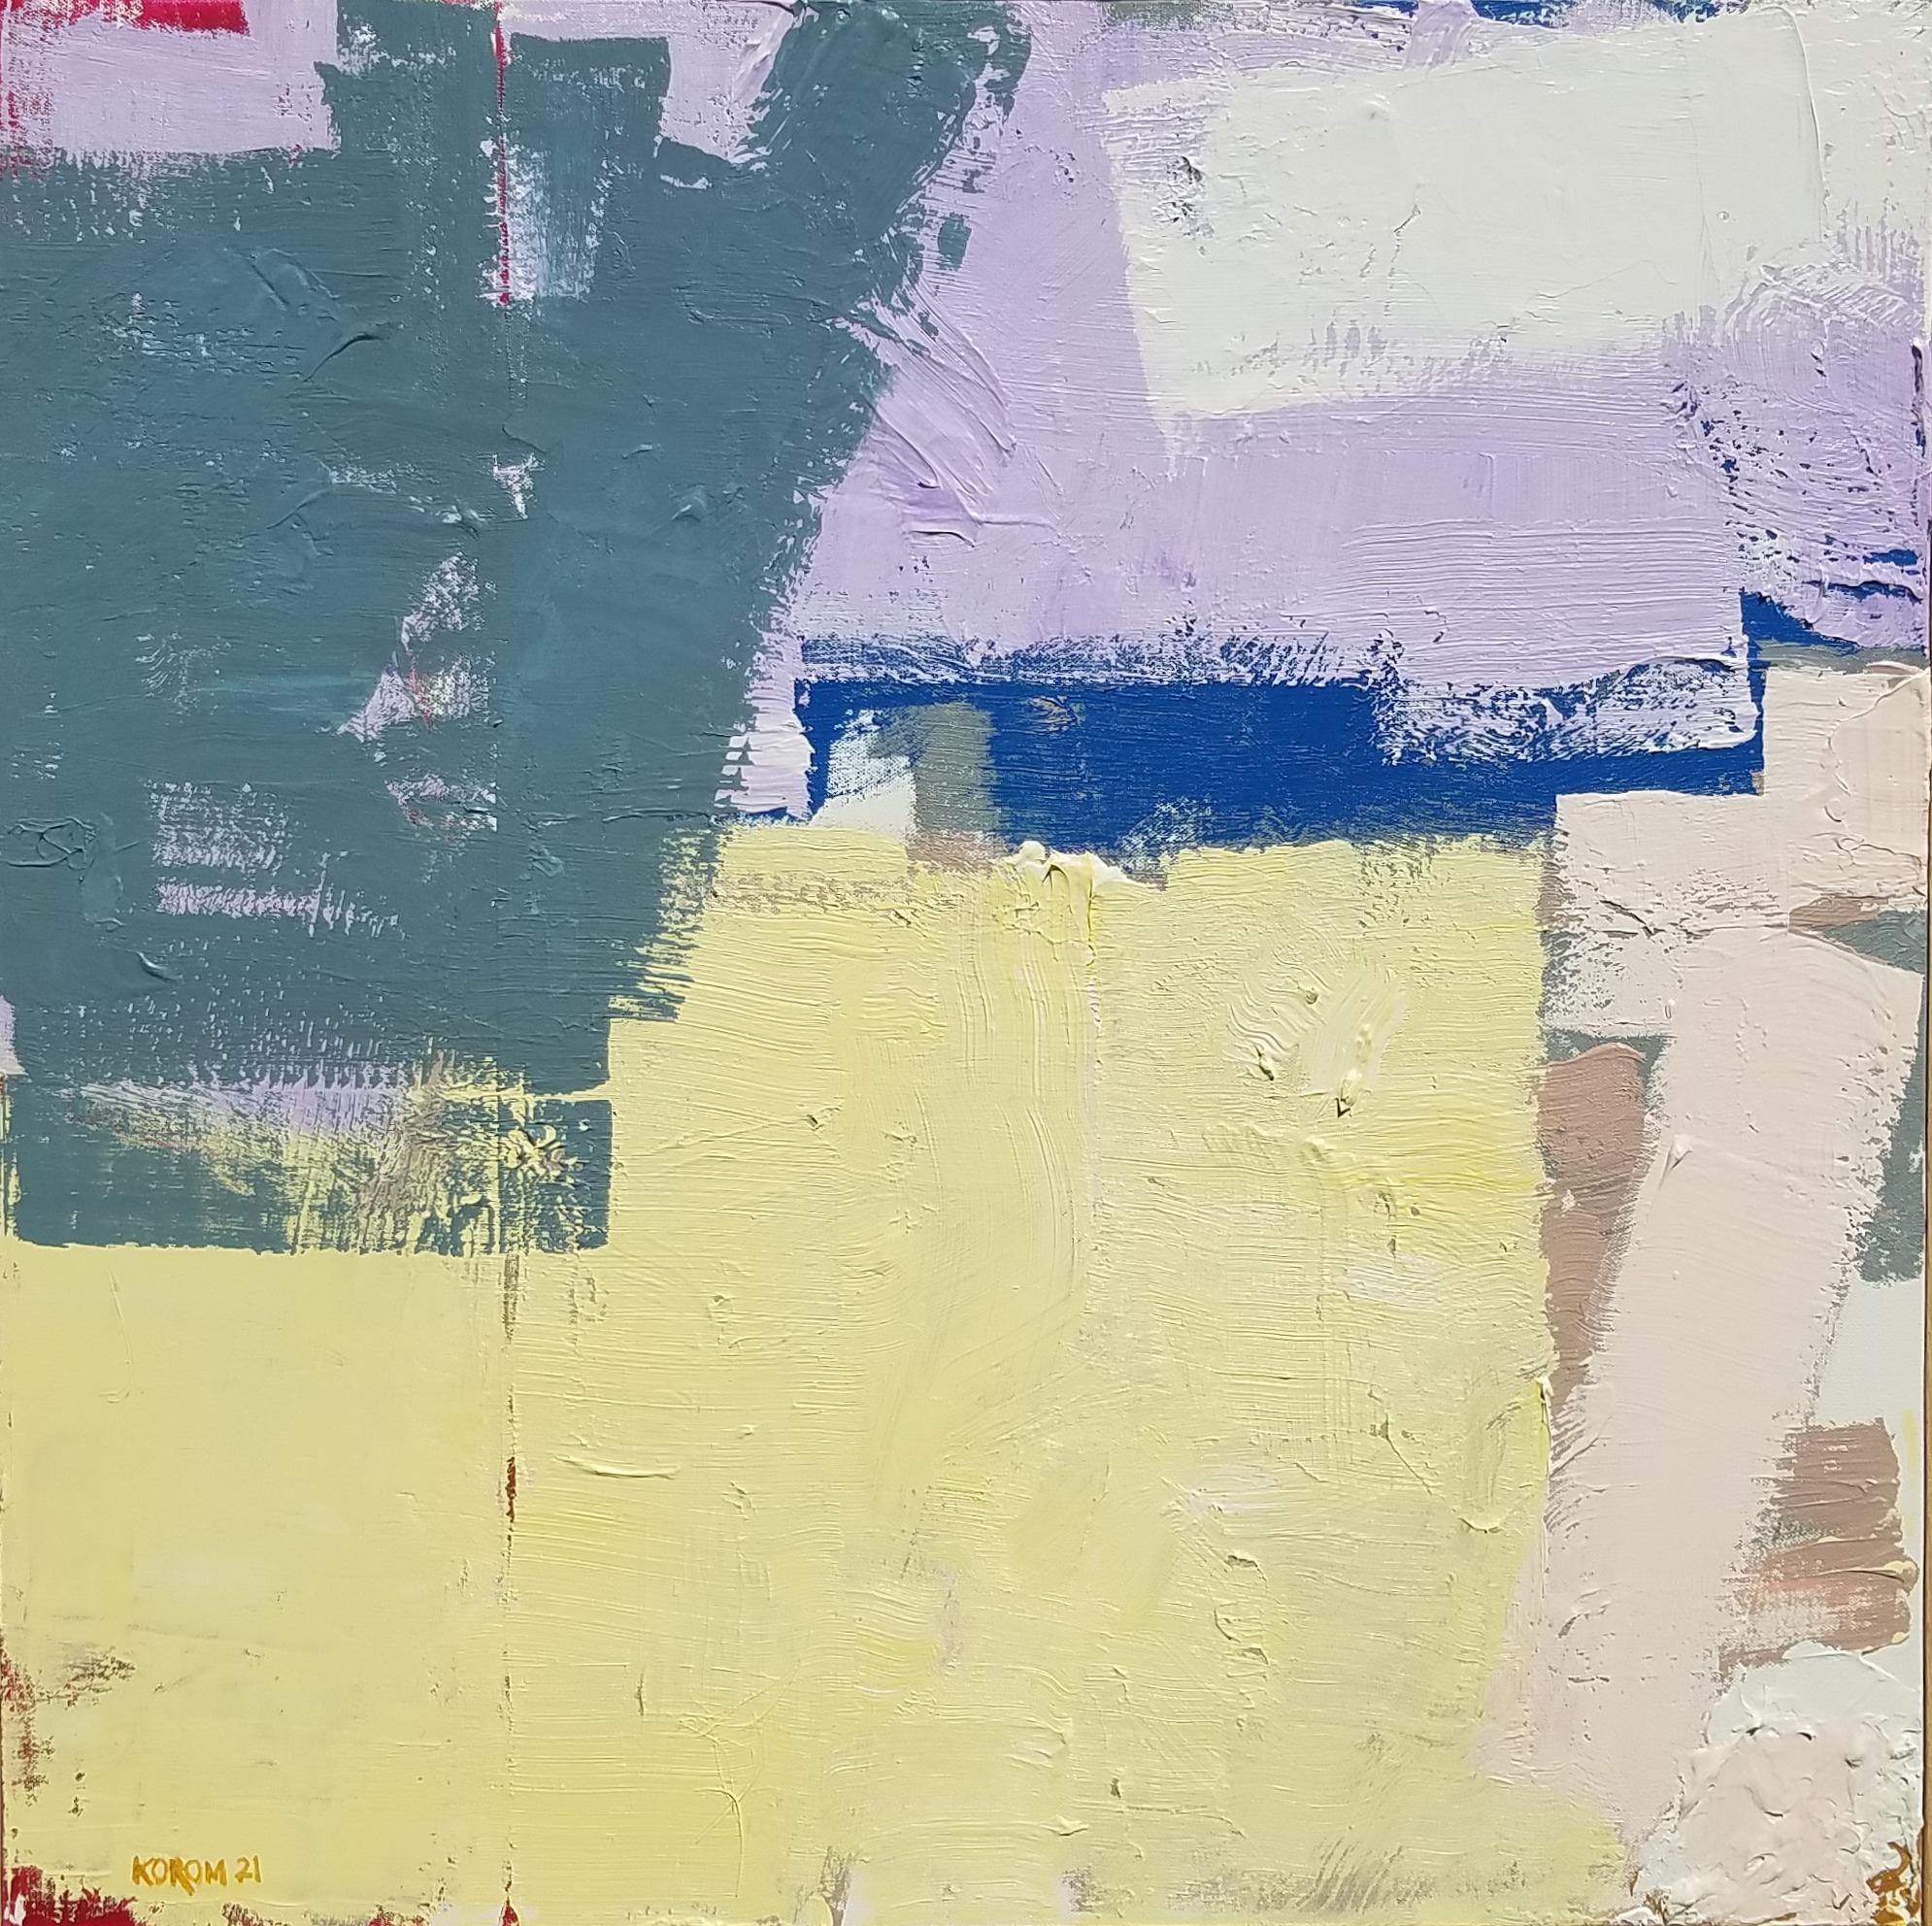 Abstract Painting Joey Korom - Conversations, peinture abstraite